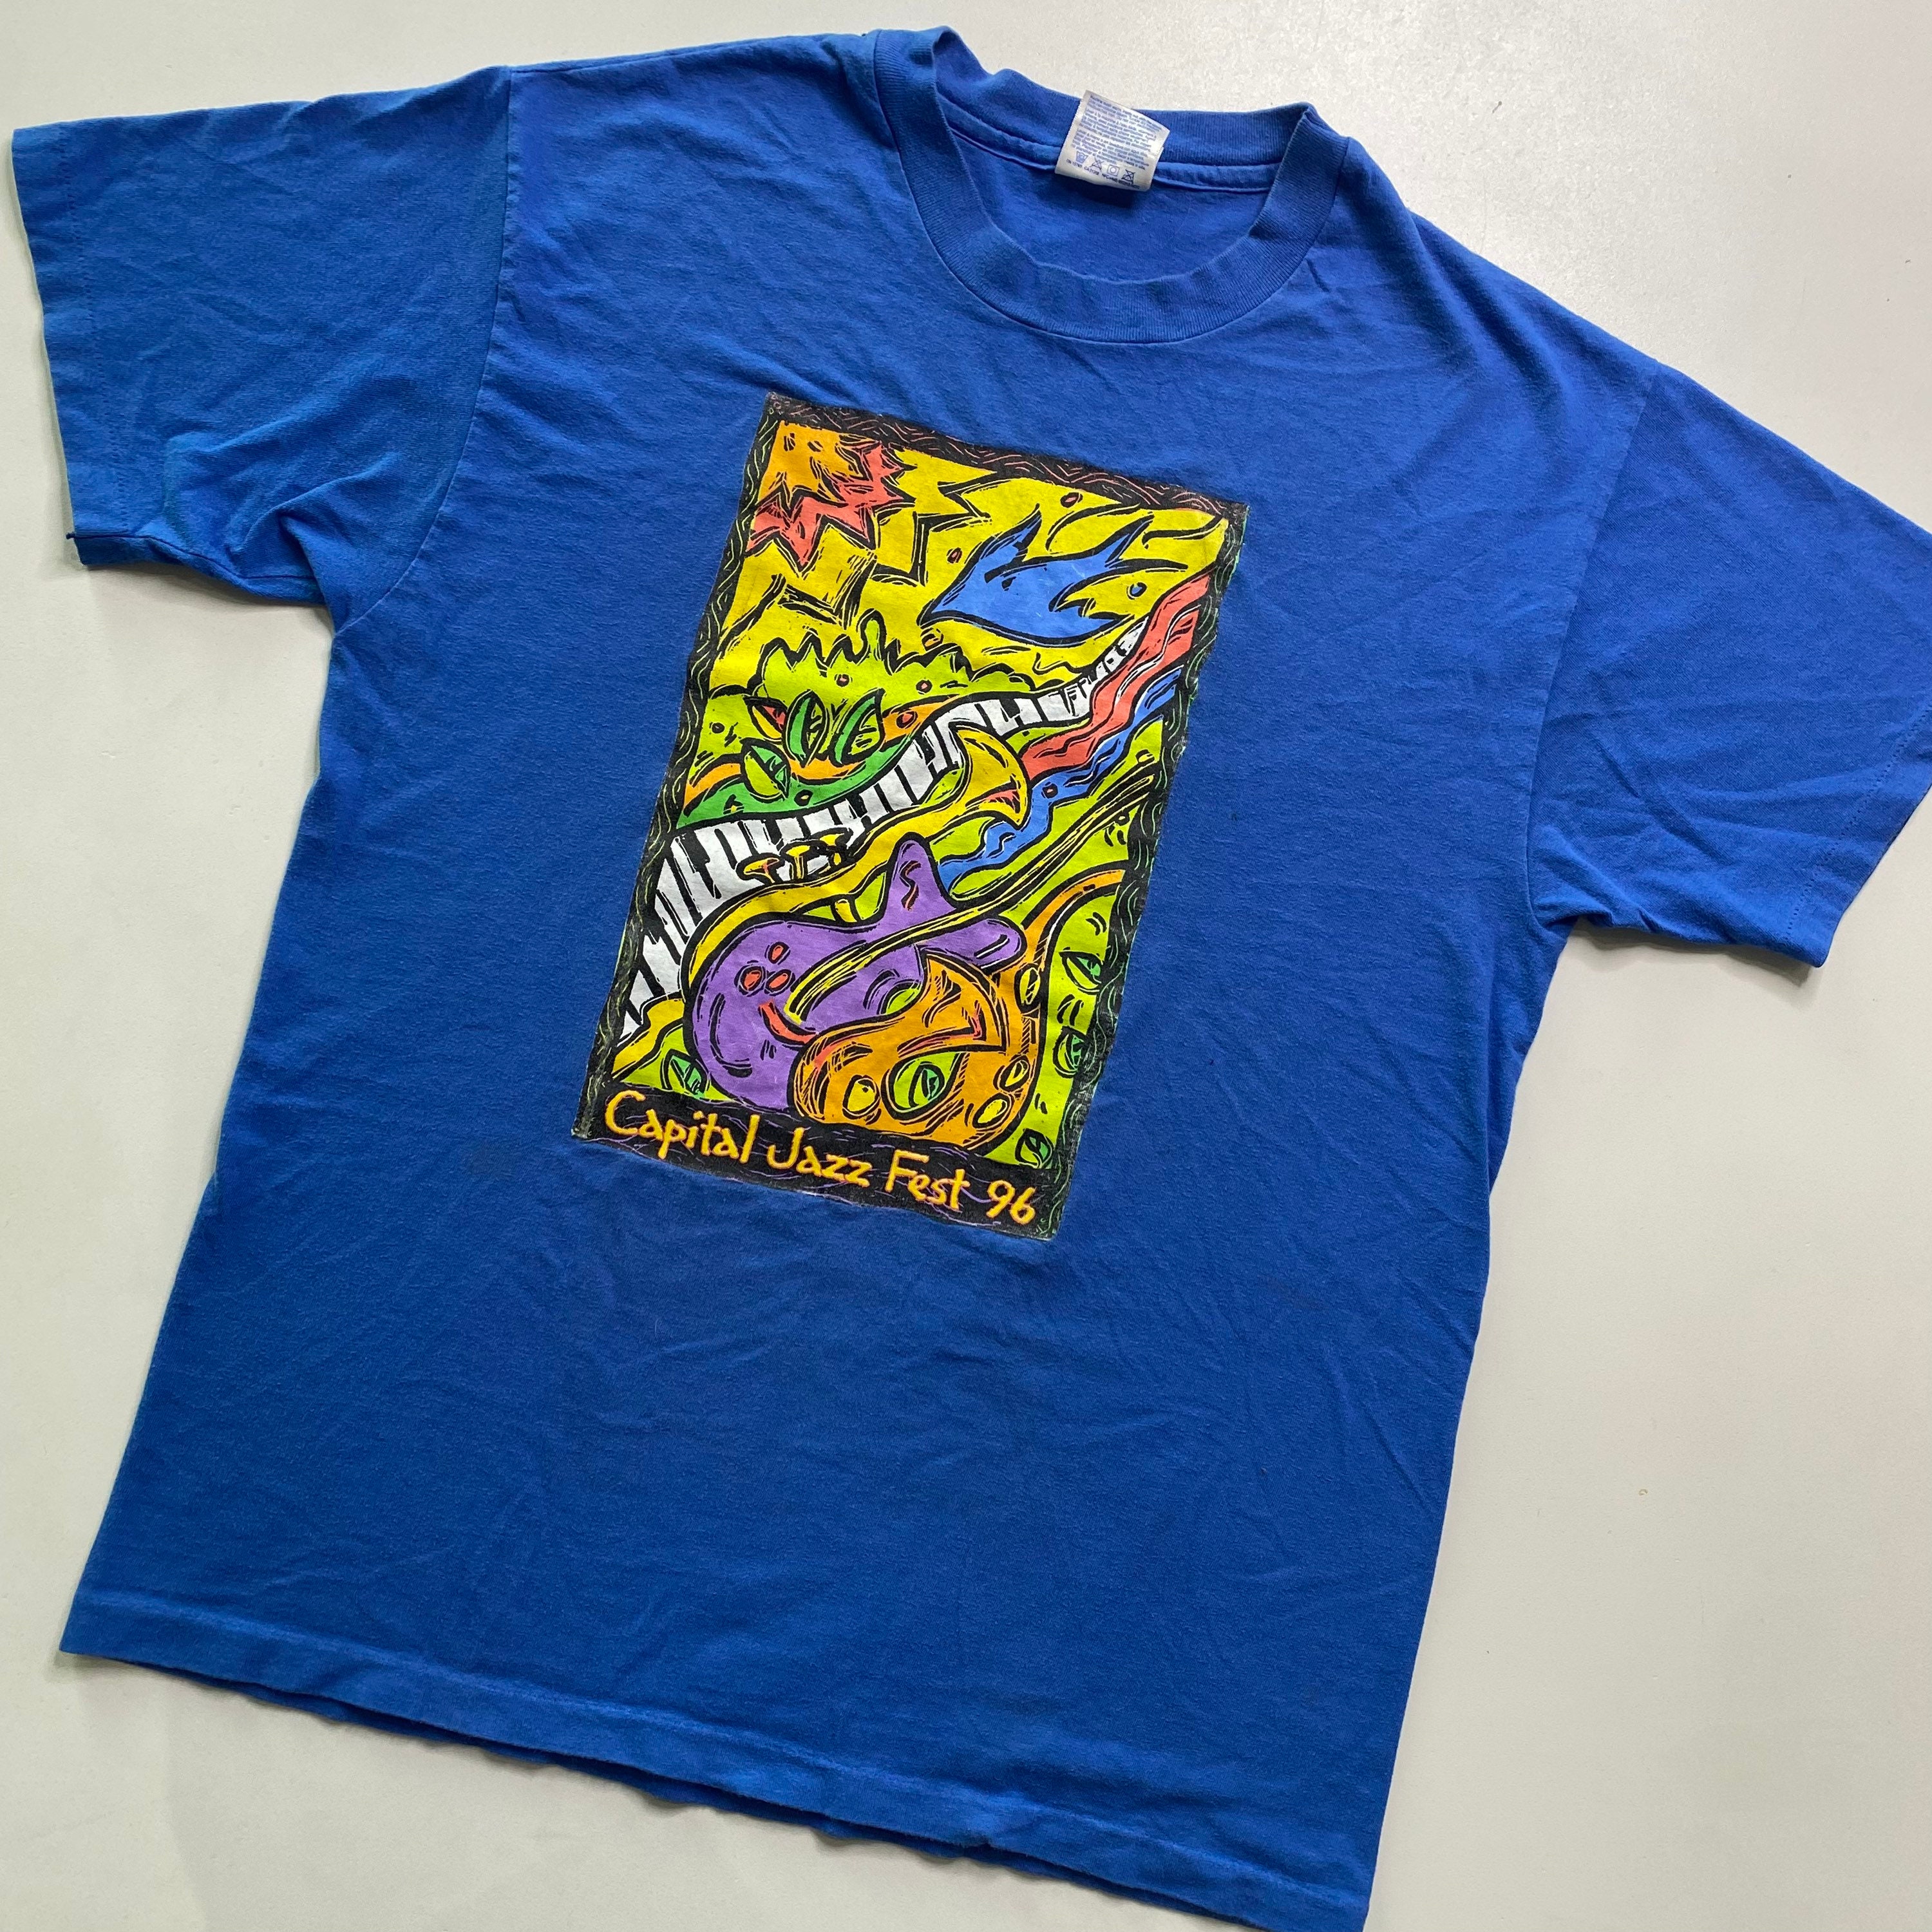 1996 Capital Jazz Fest T-Shirt Men's Large | Etsy